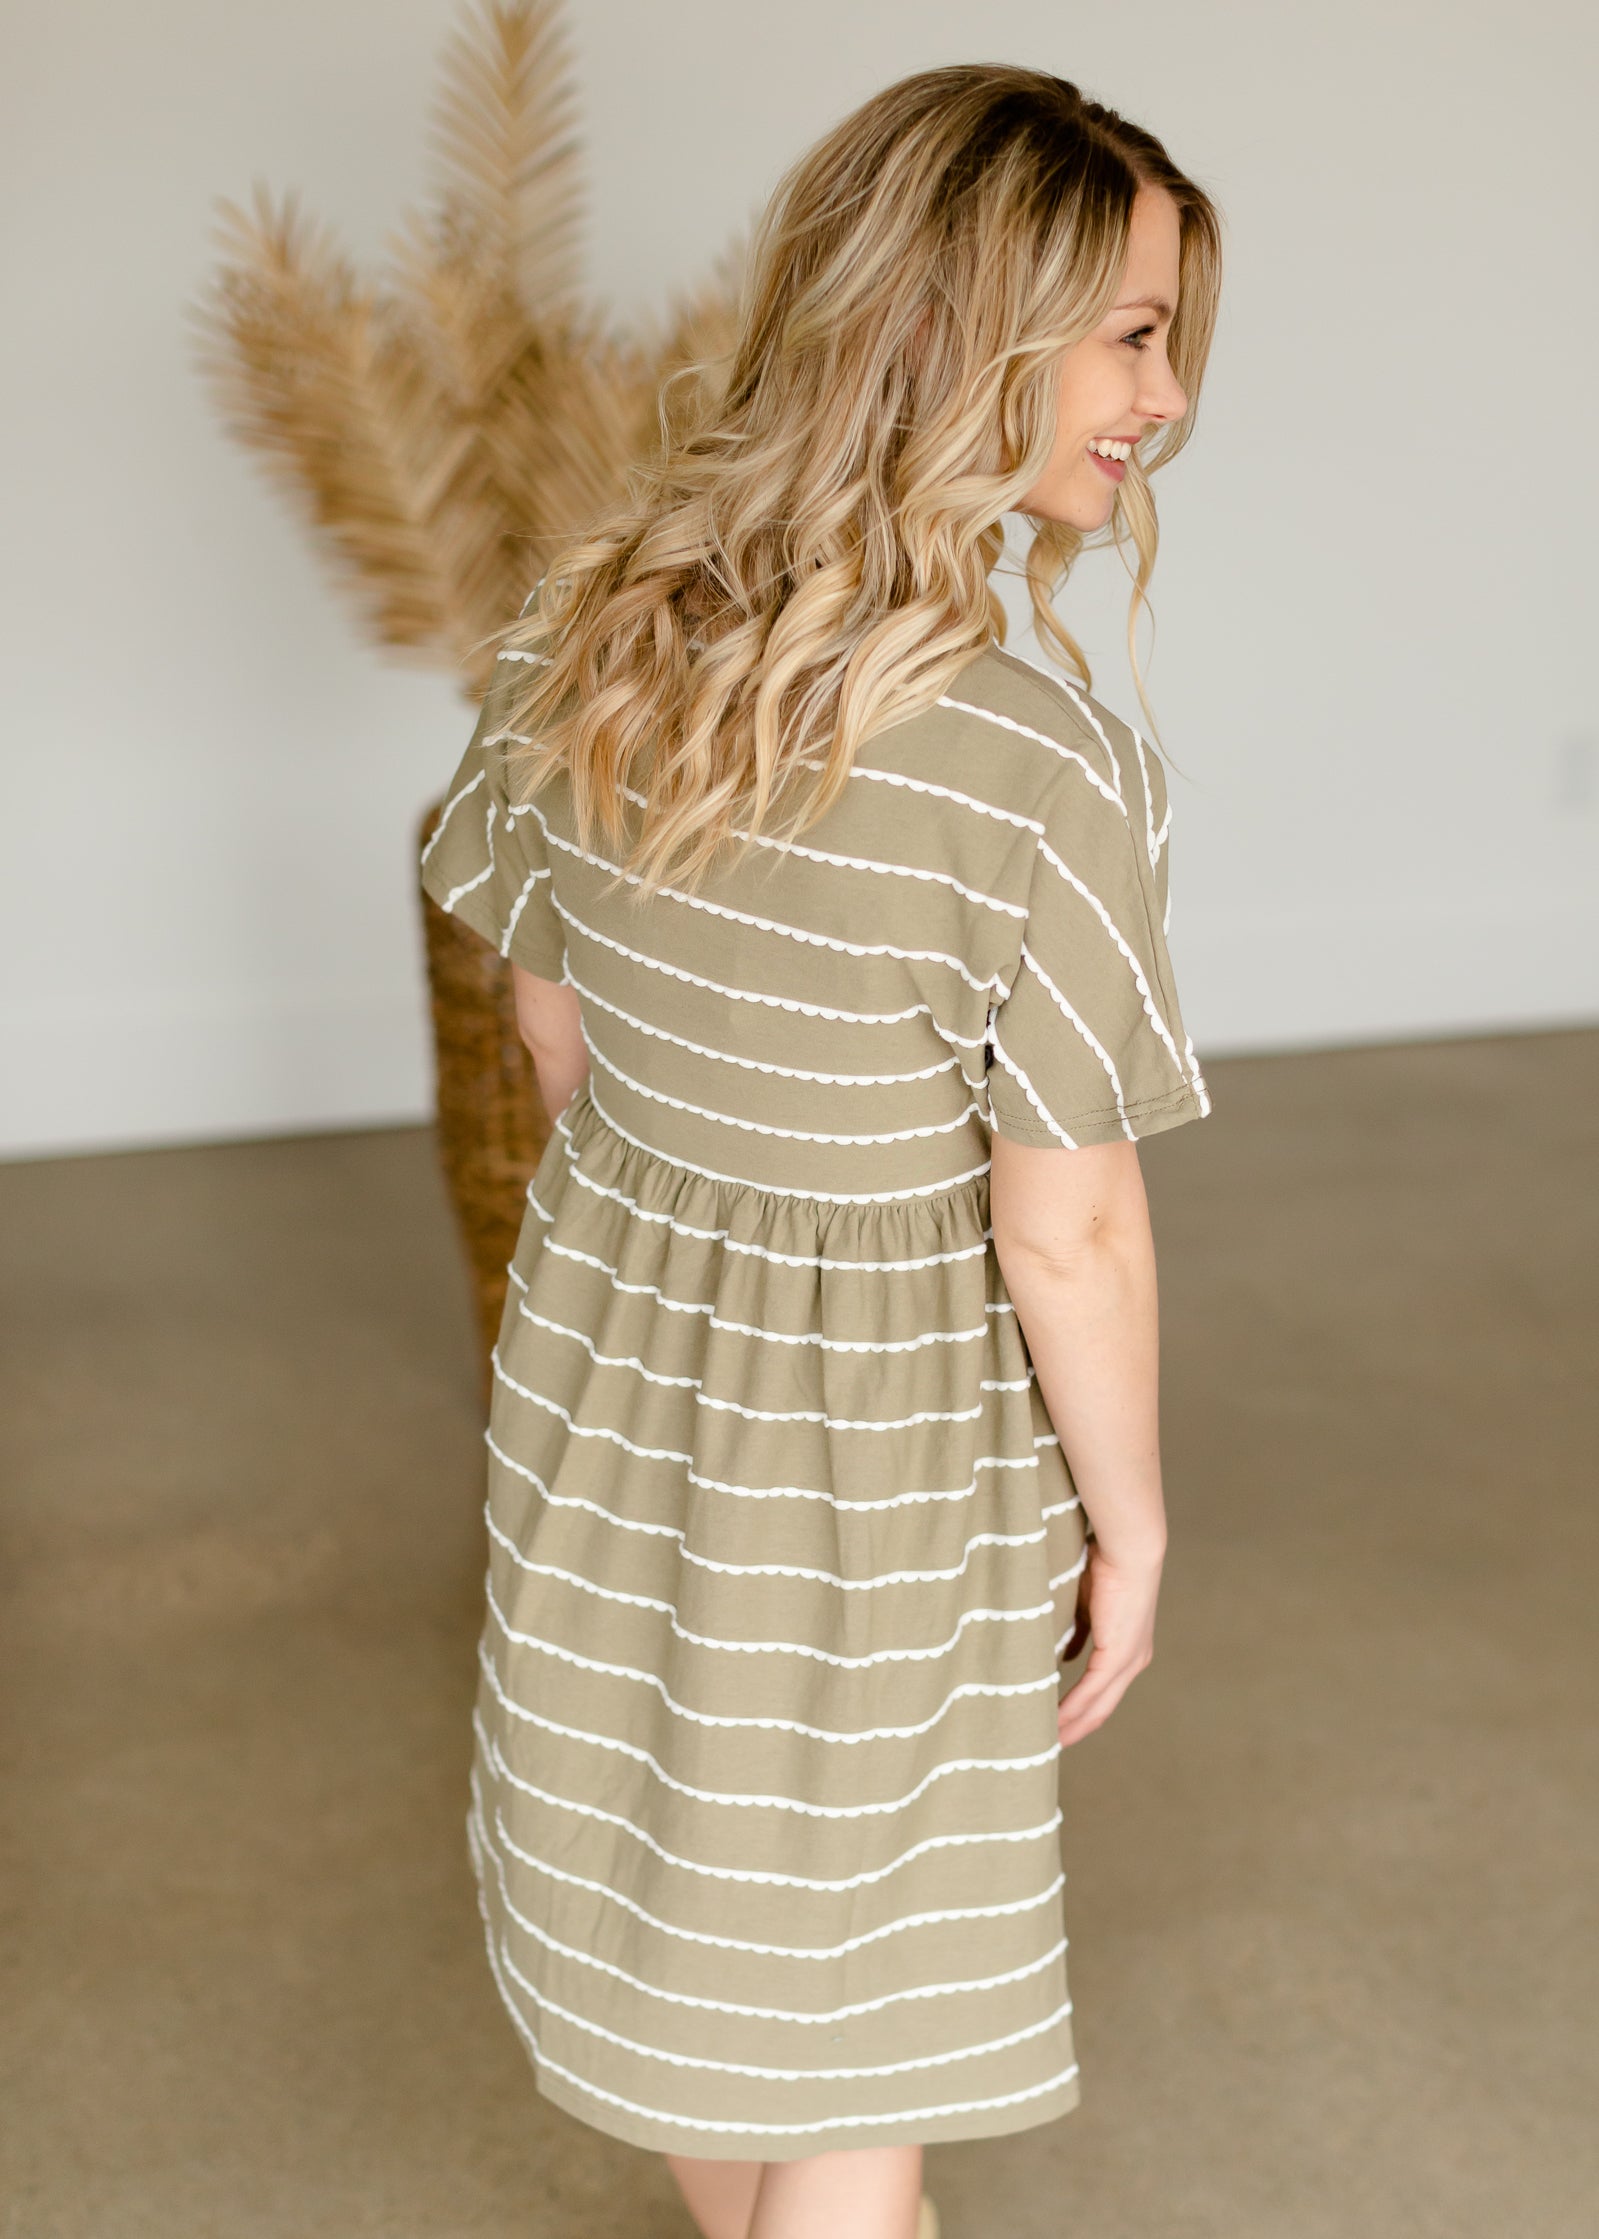 Taylor Olive Scalloped Midi Dress - FINAL SALE Dresses